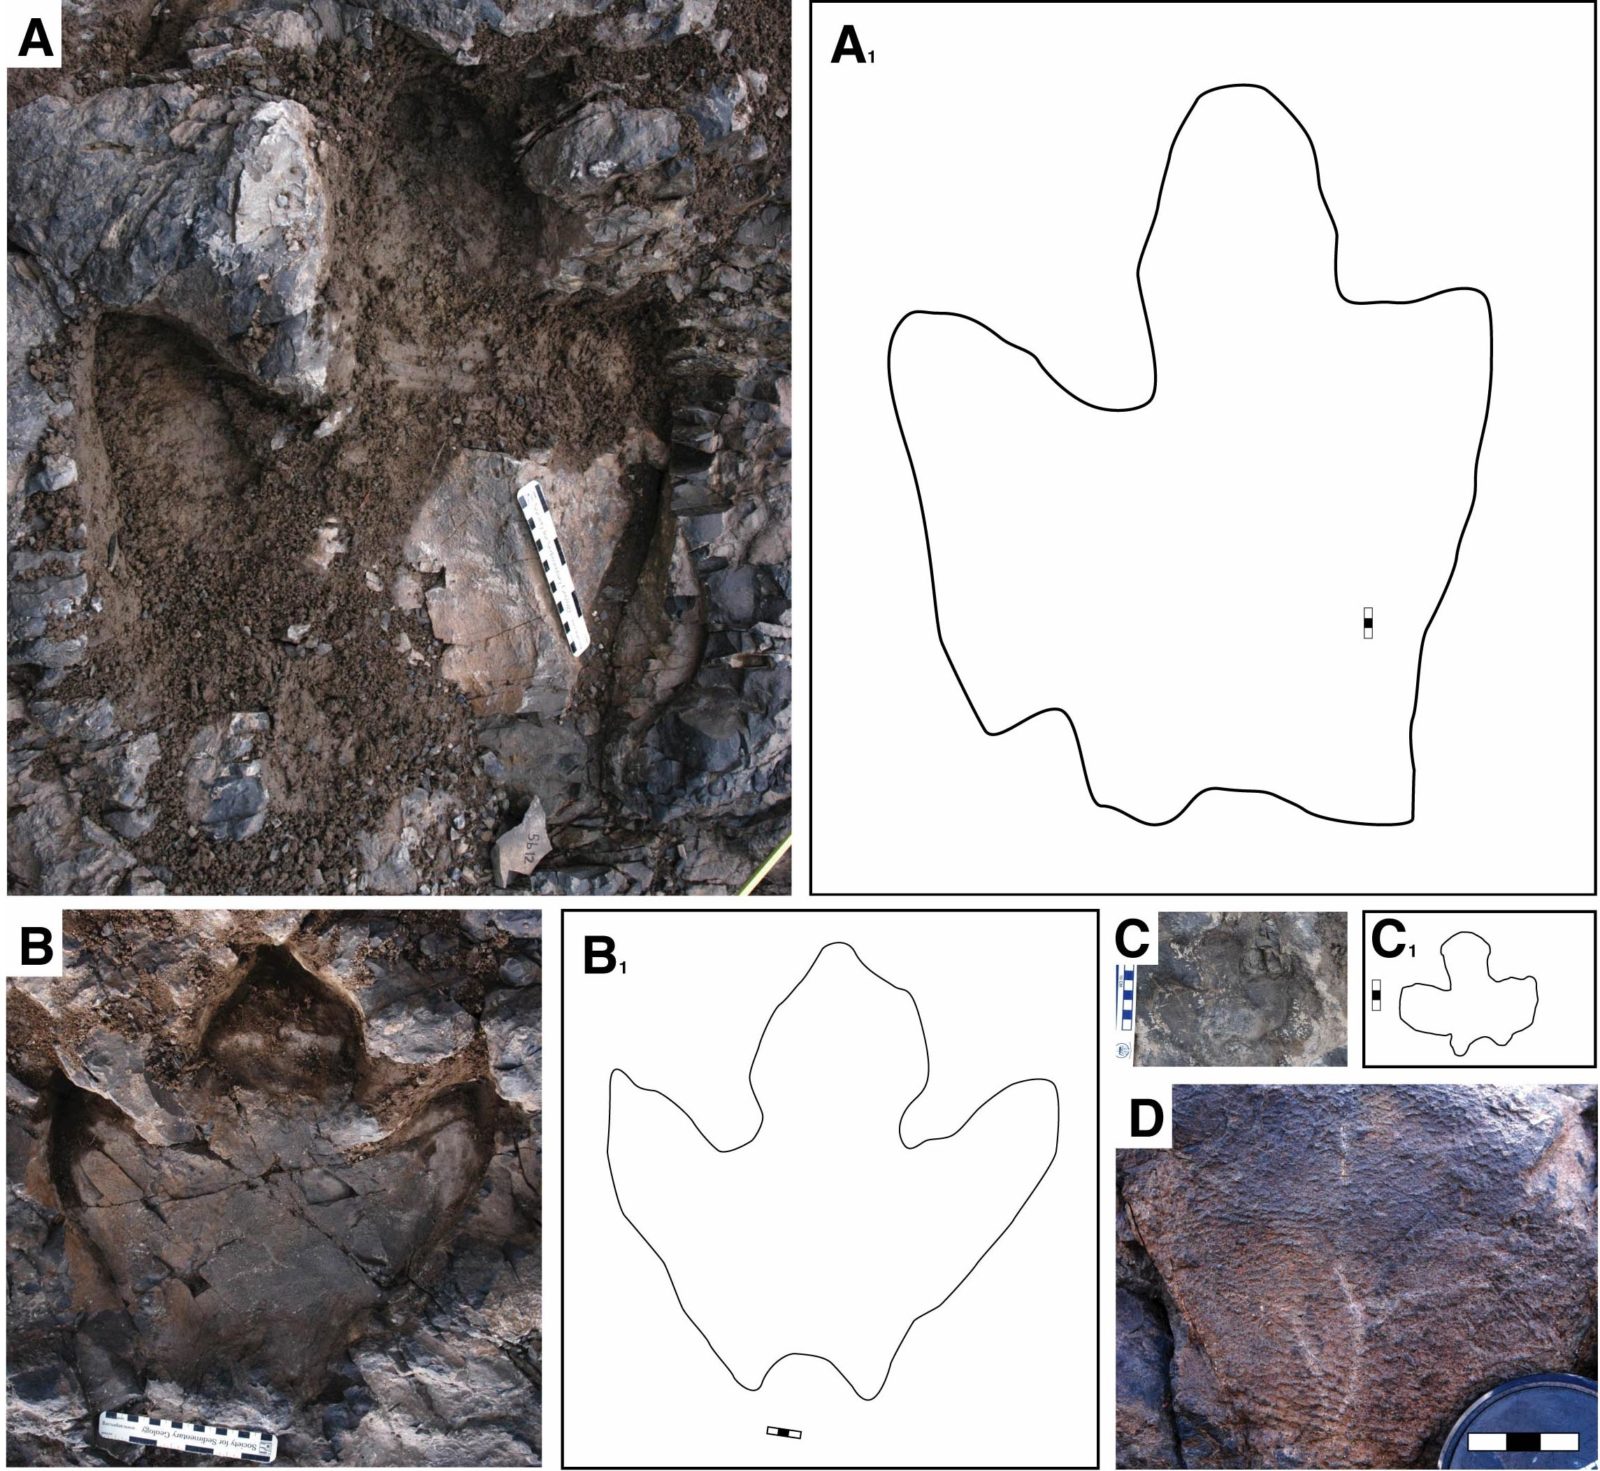 Fossilized hadrosaur tracks: A=adult, B=sub-adults, C= dinosaur tots, D= skin impression